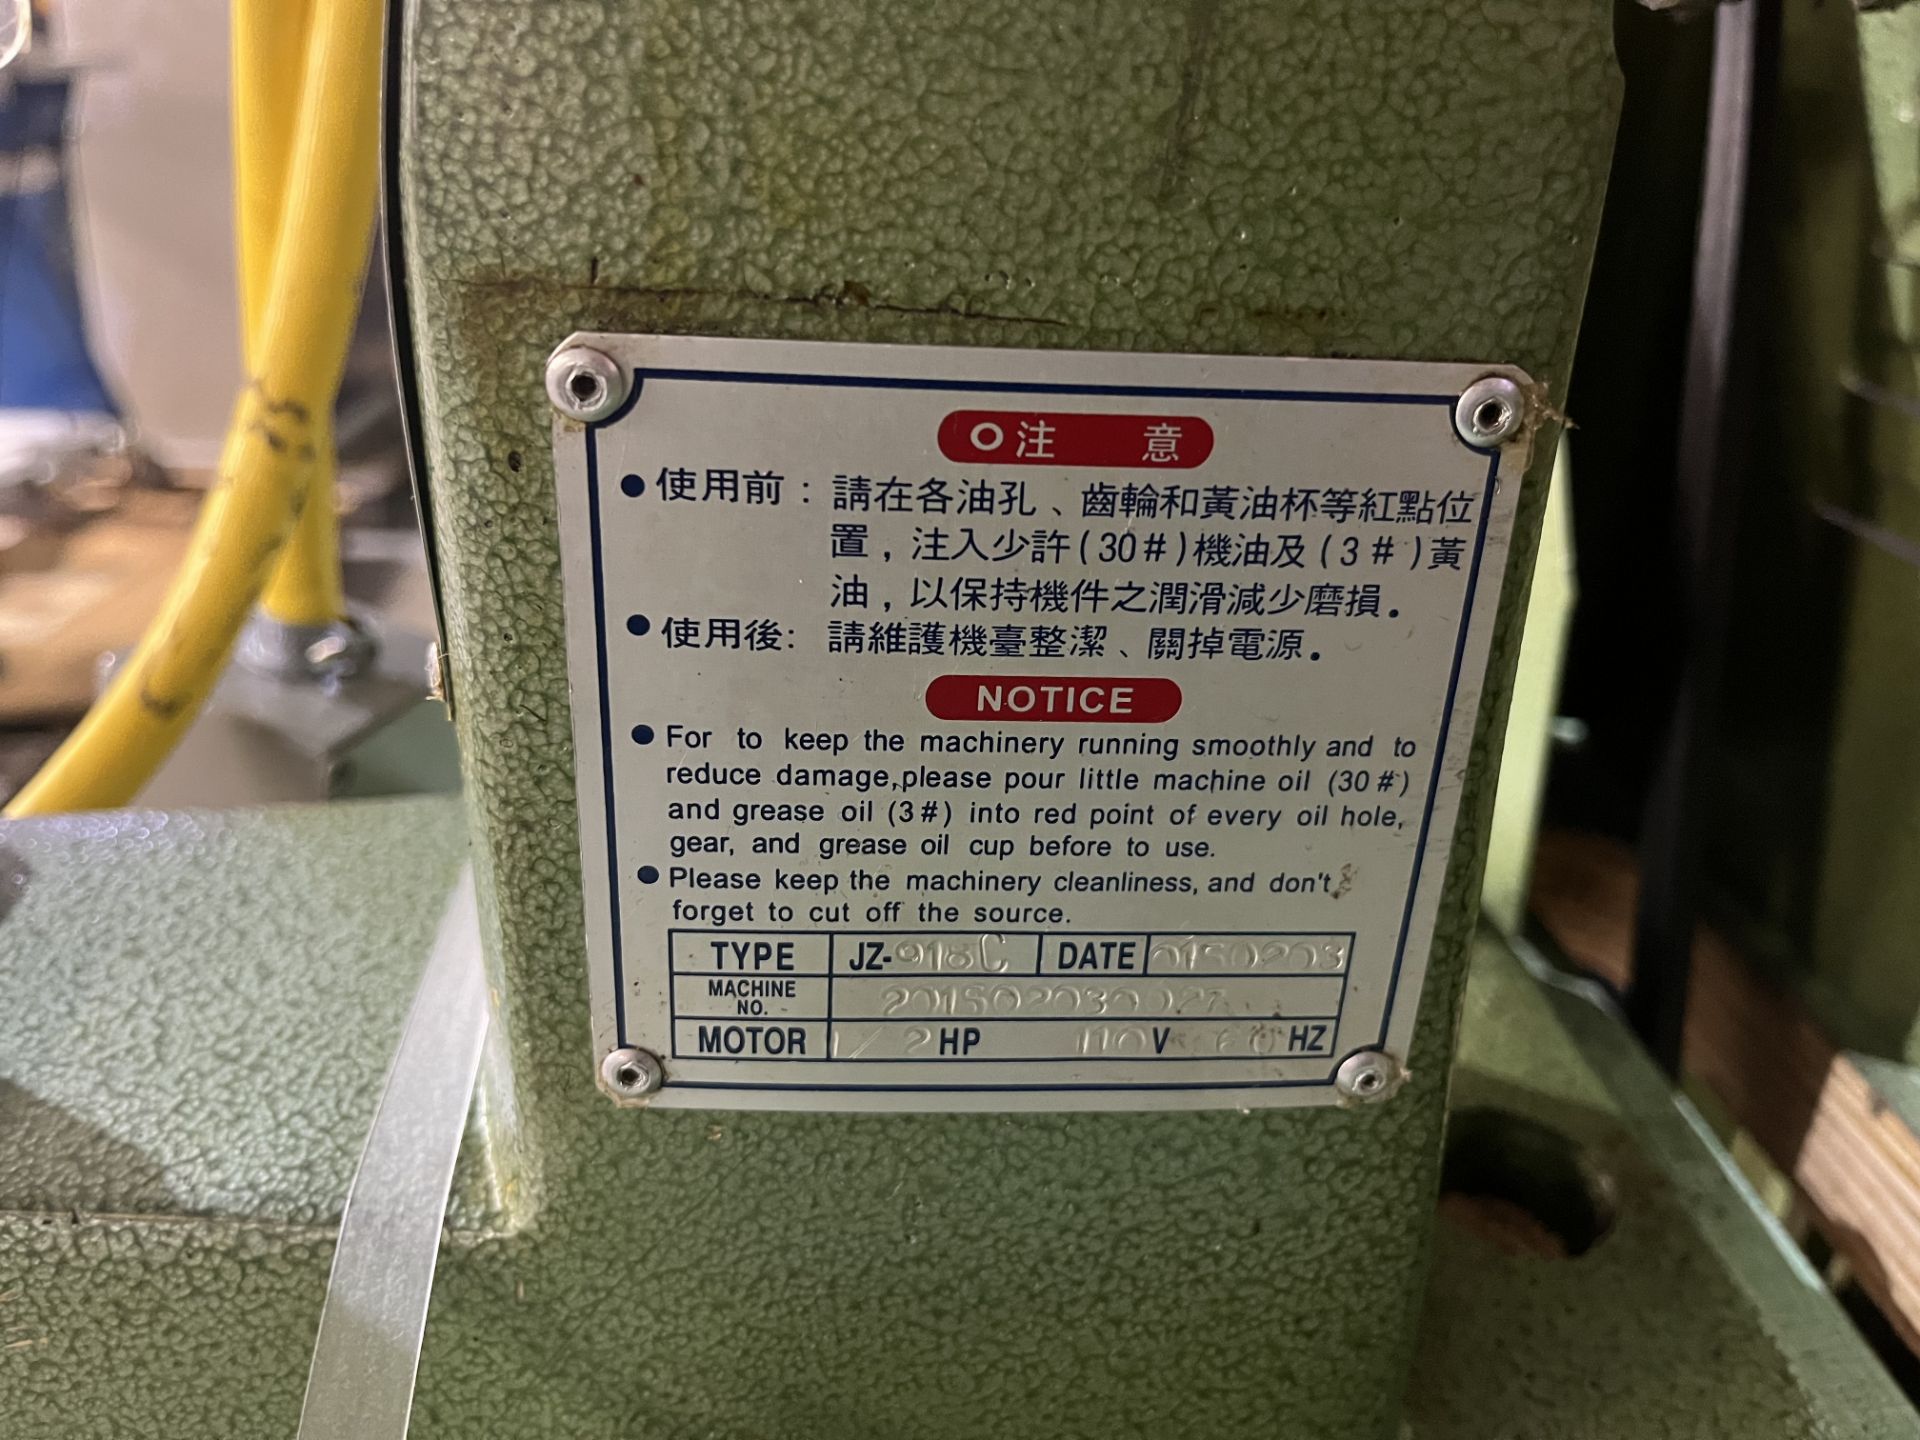 Dongguan Jiuzhou Machinery JZ-918M Semi Automatic Riveting Machine in Good, Working Condition S/N - Image 4 of 4